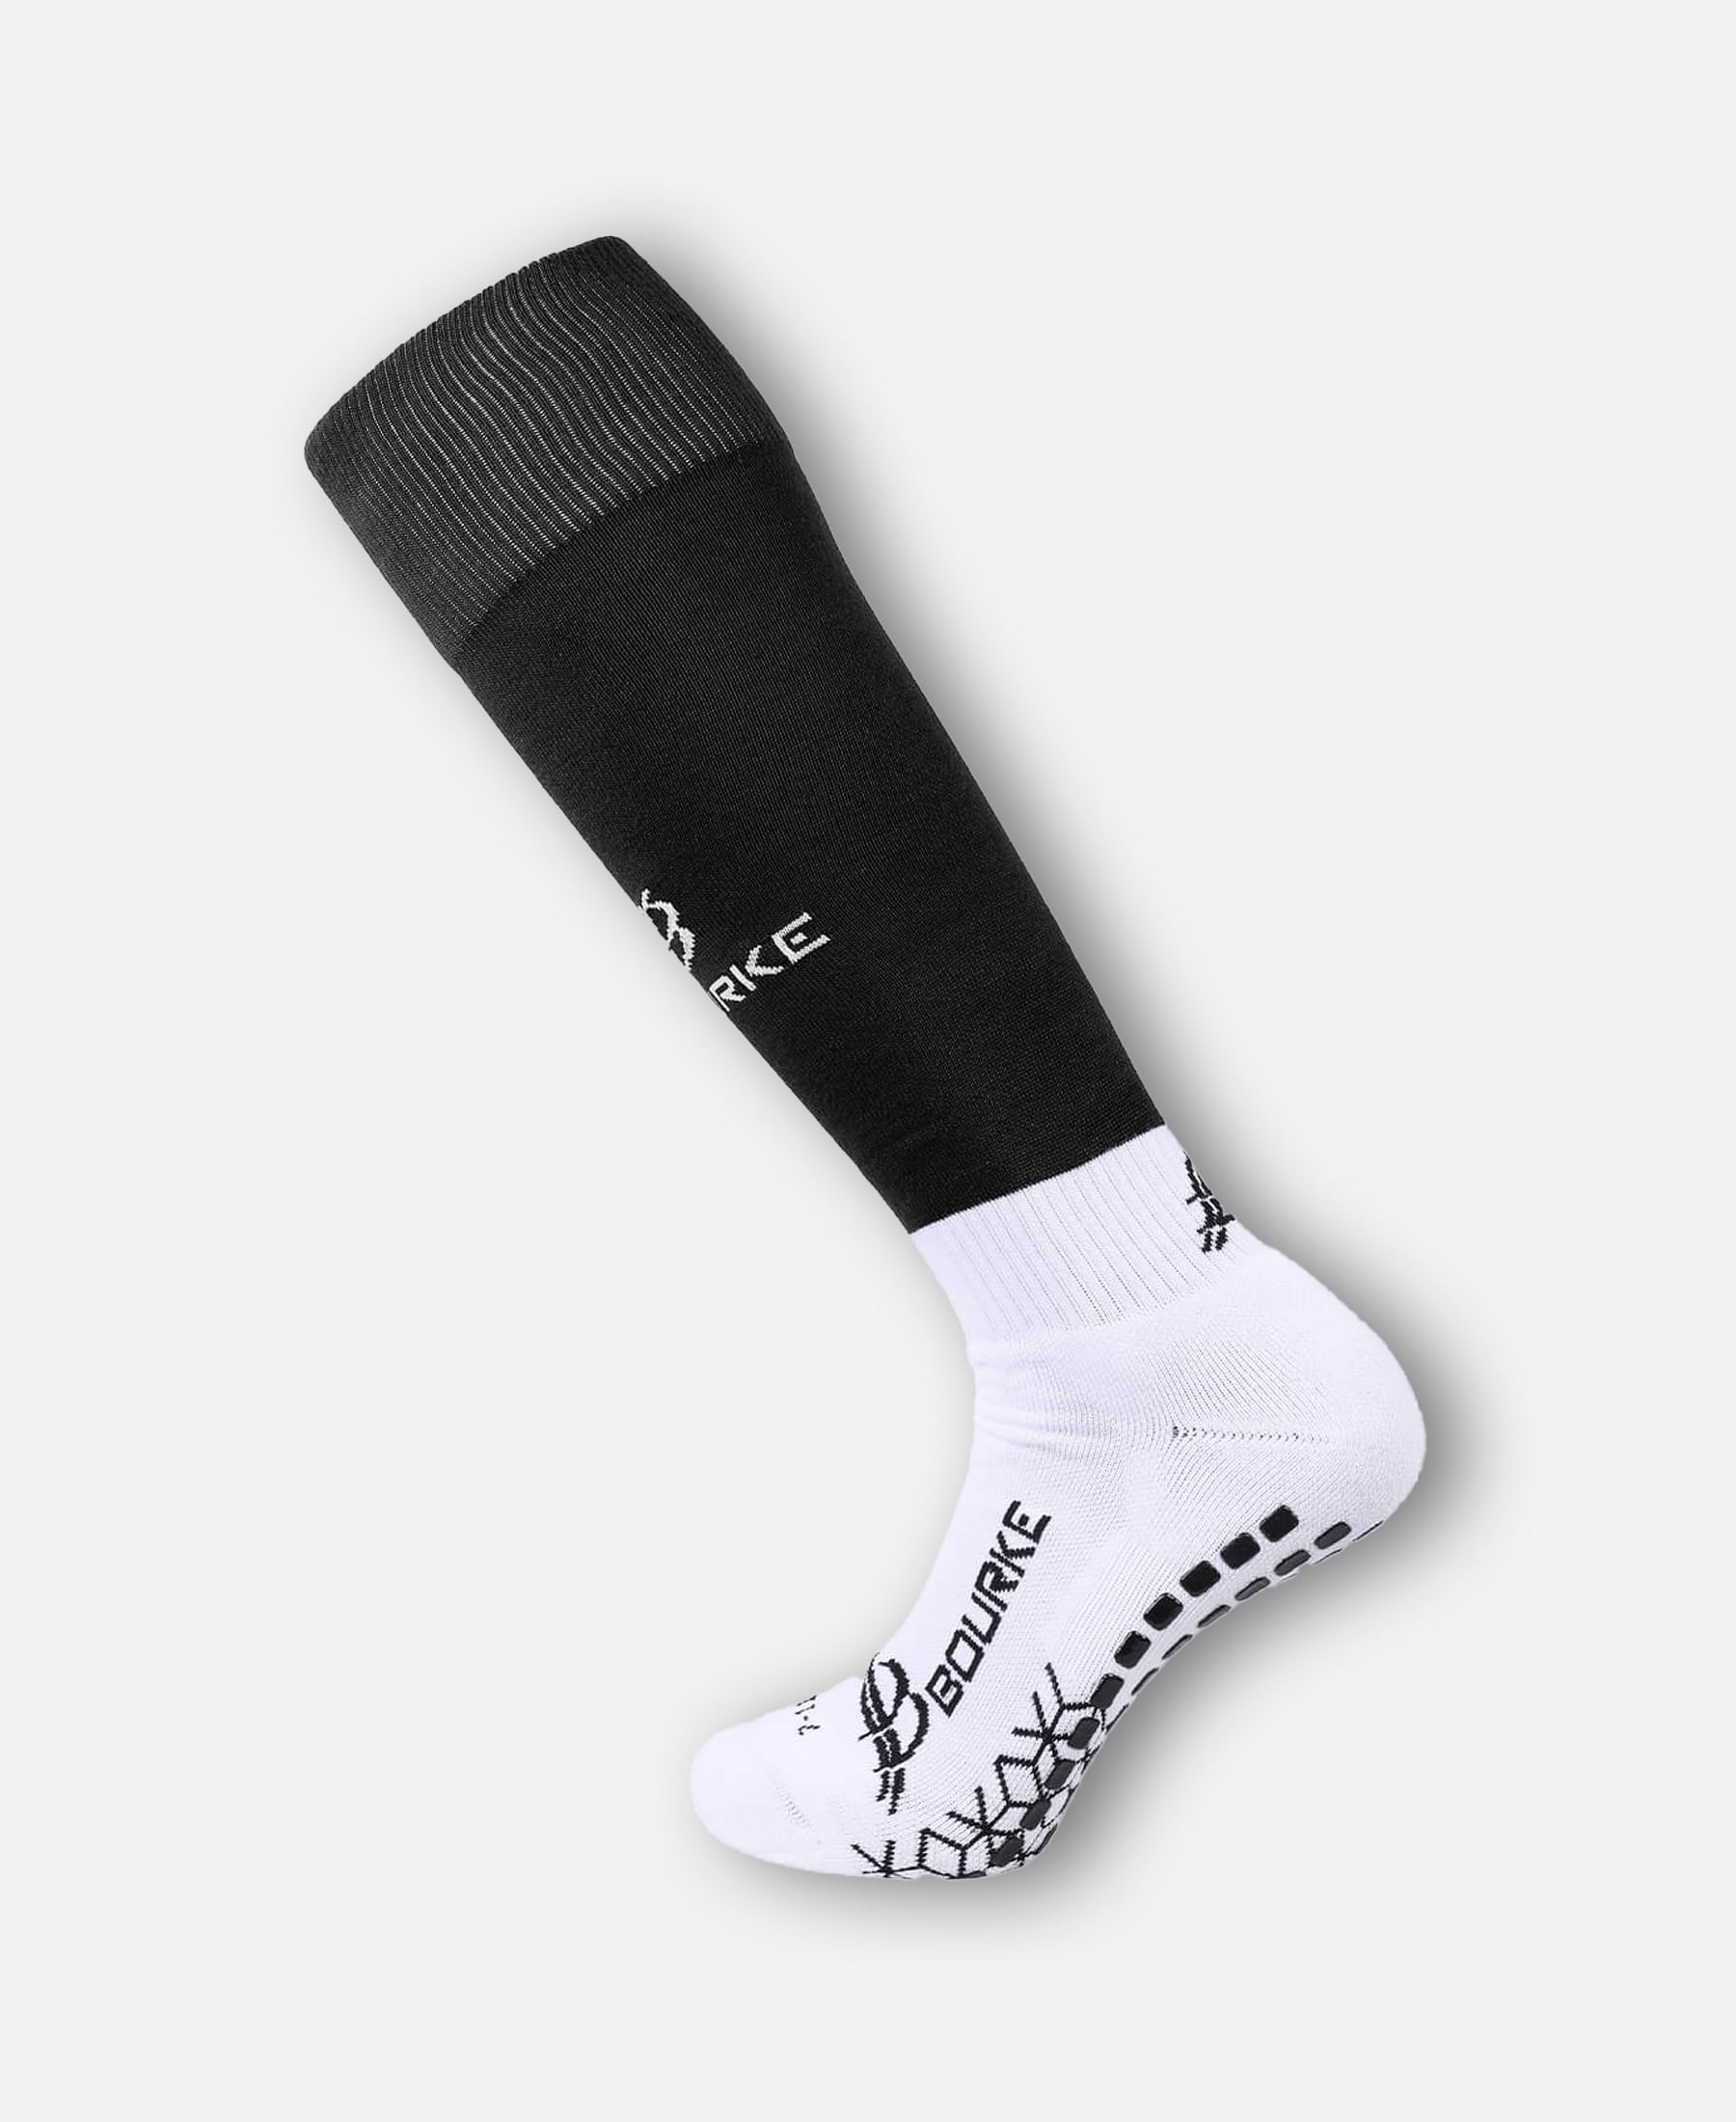 Freshford Town FC Miniz XL Socks (Black/White)